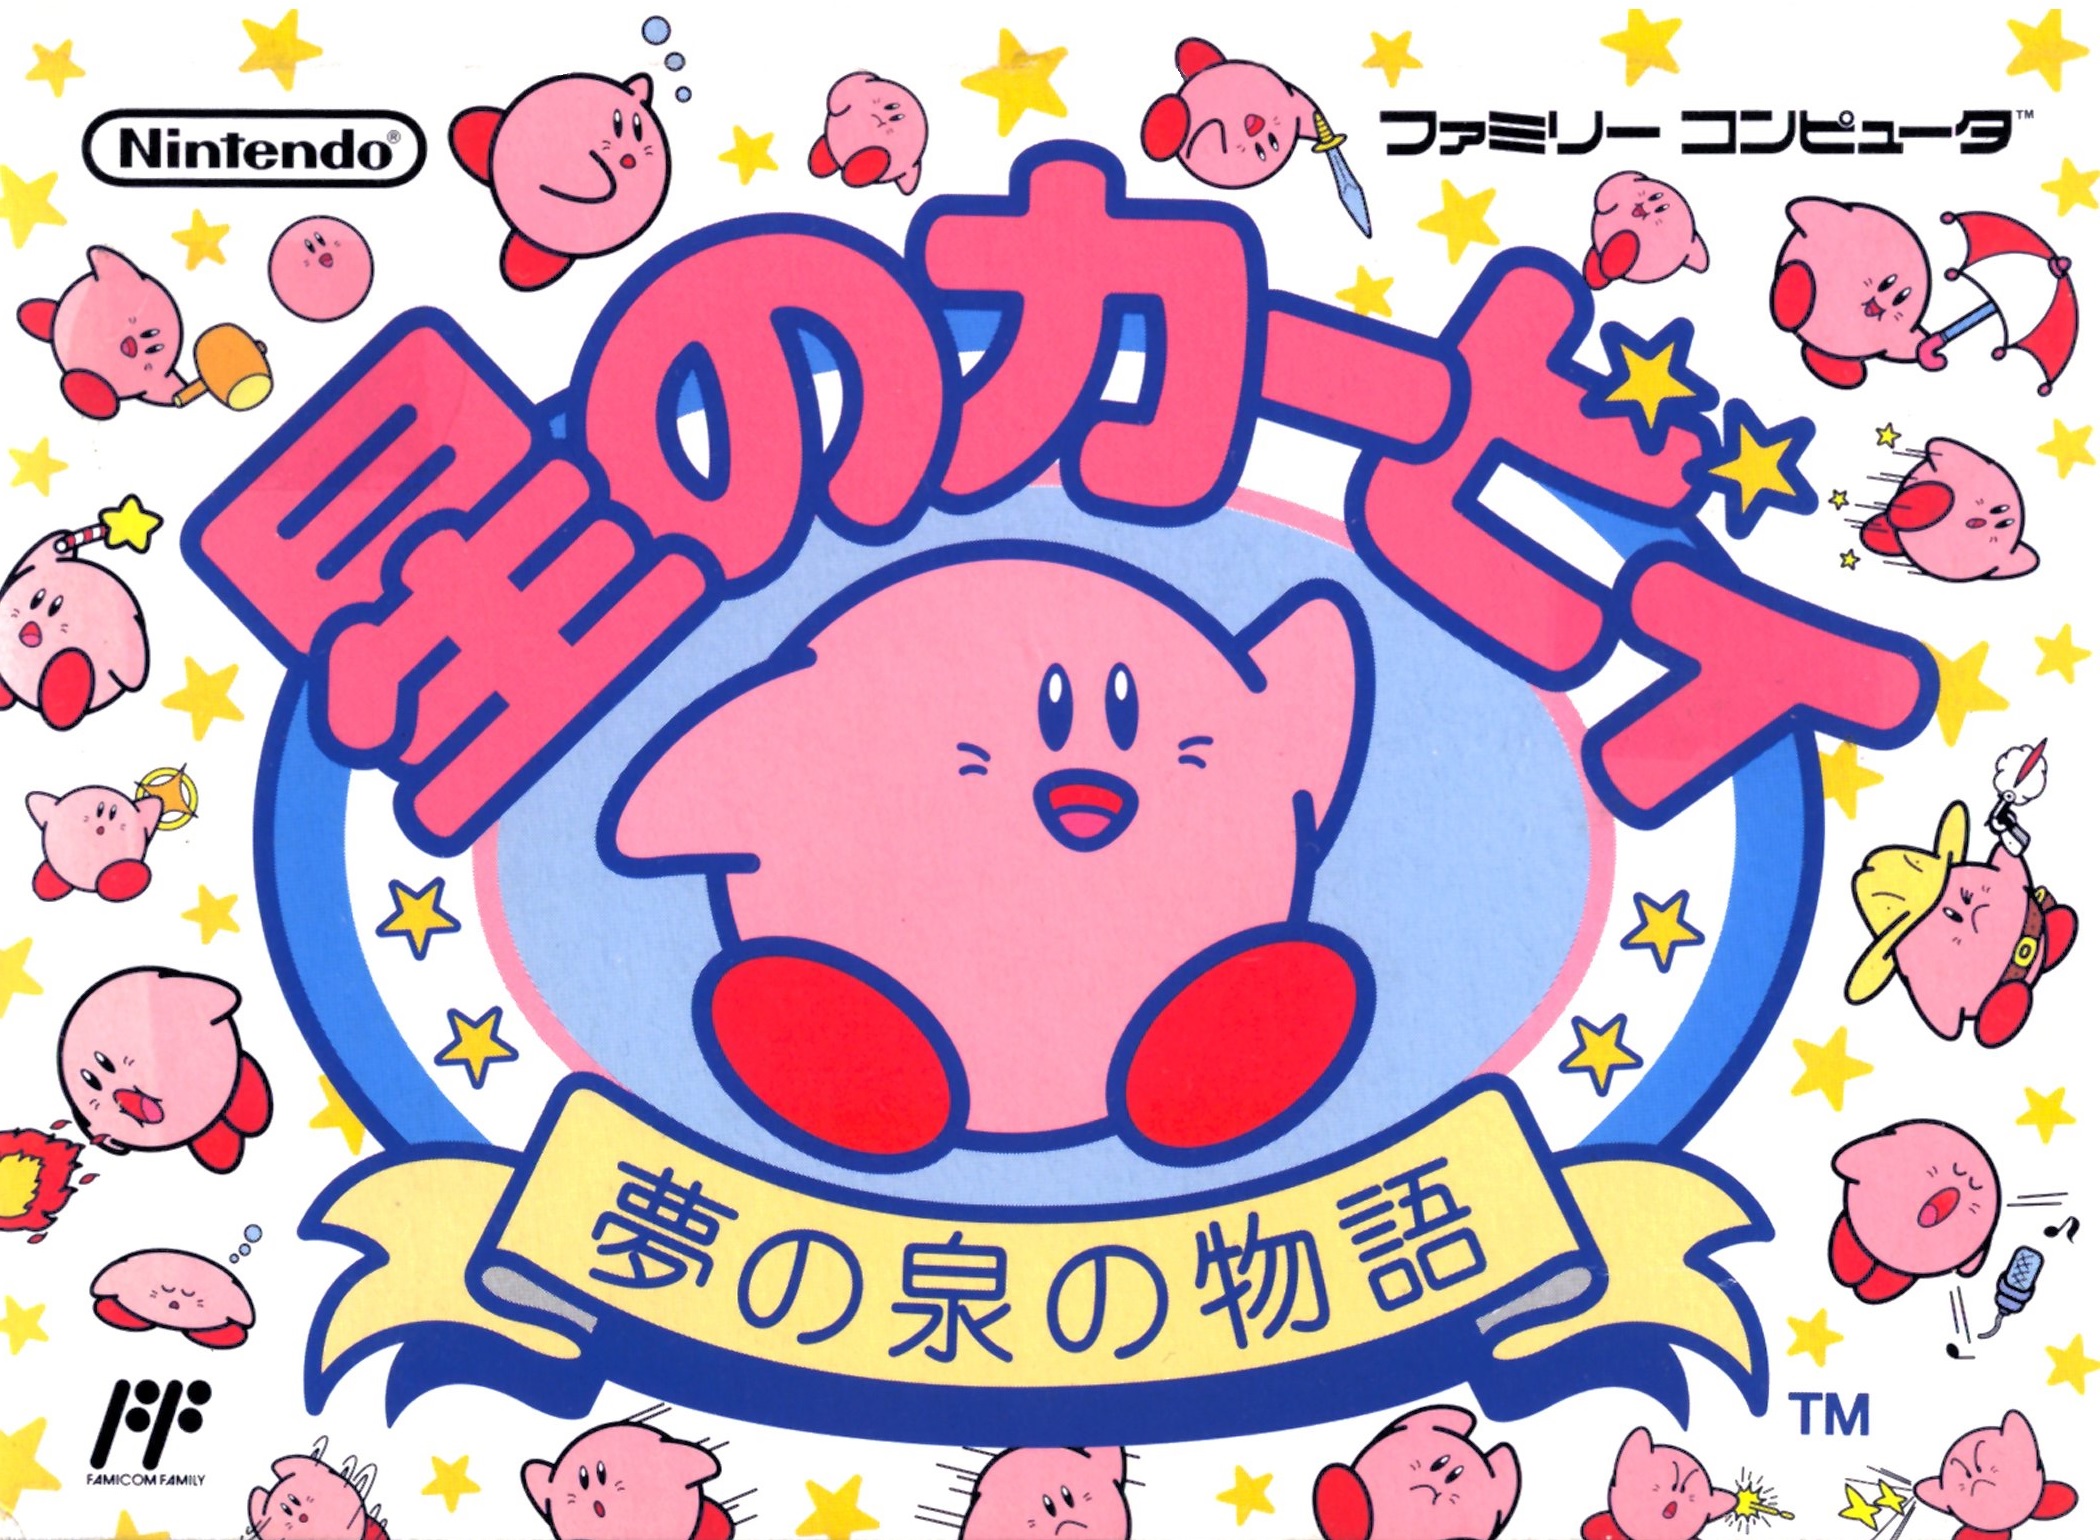 Kirby's Adventure | Kirby Wiki | Fandom